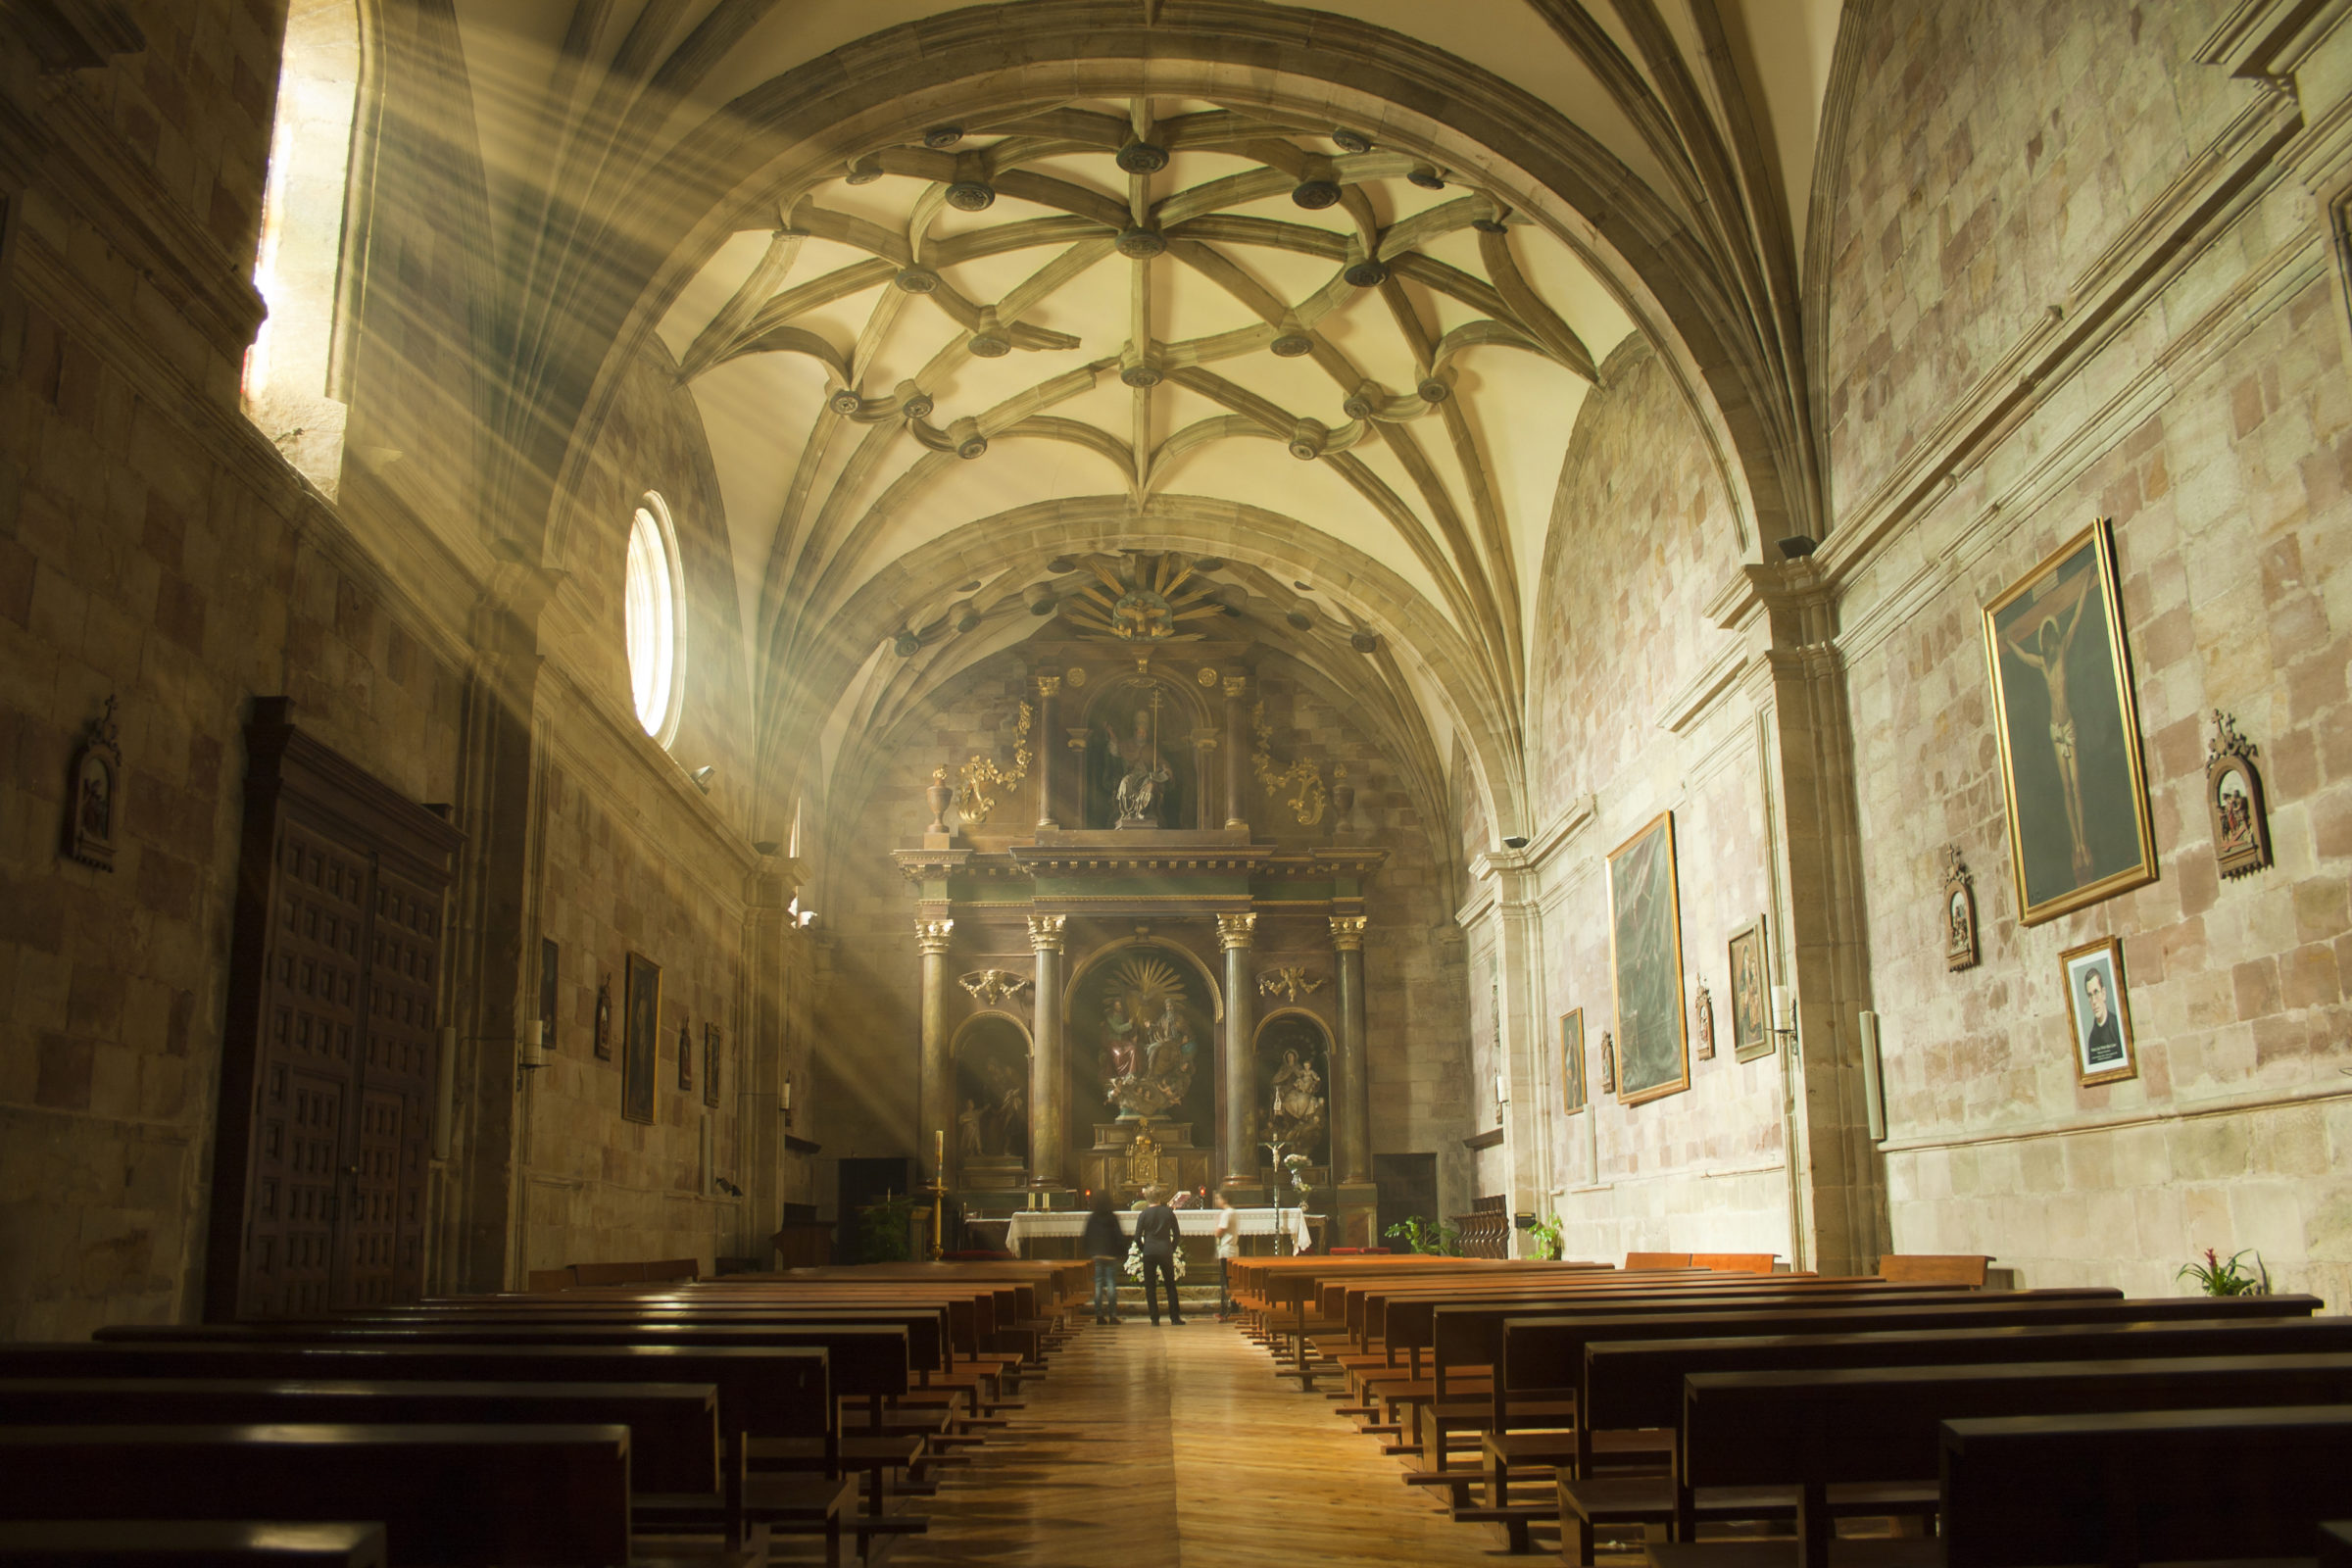 Interior view of a church.